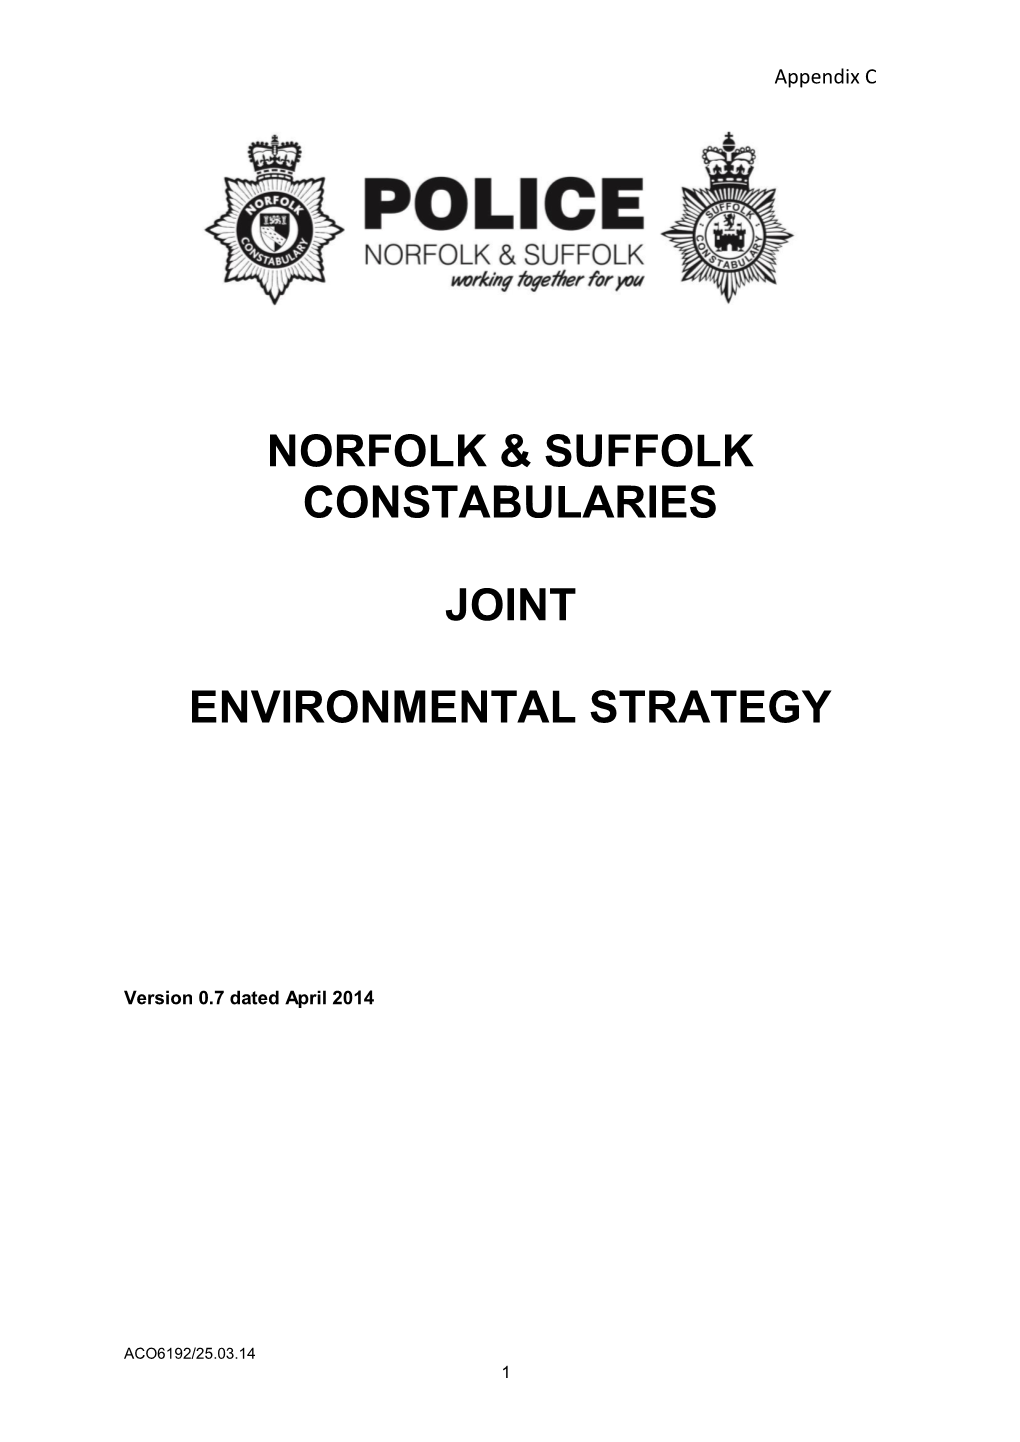 Norfolk & Suffolk Constabularies Joint